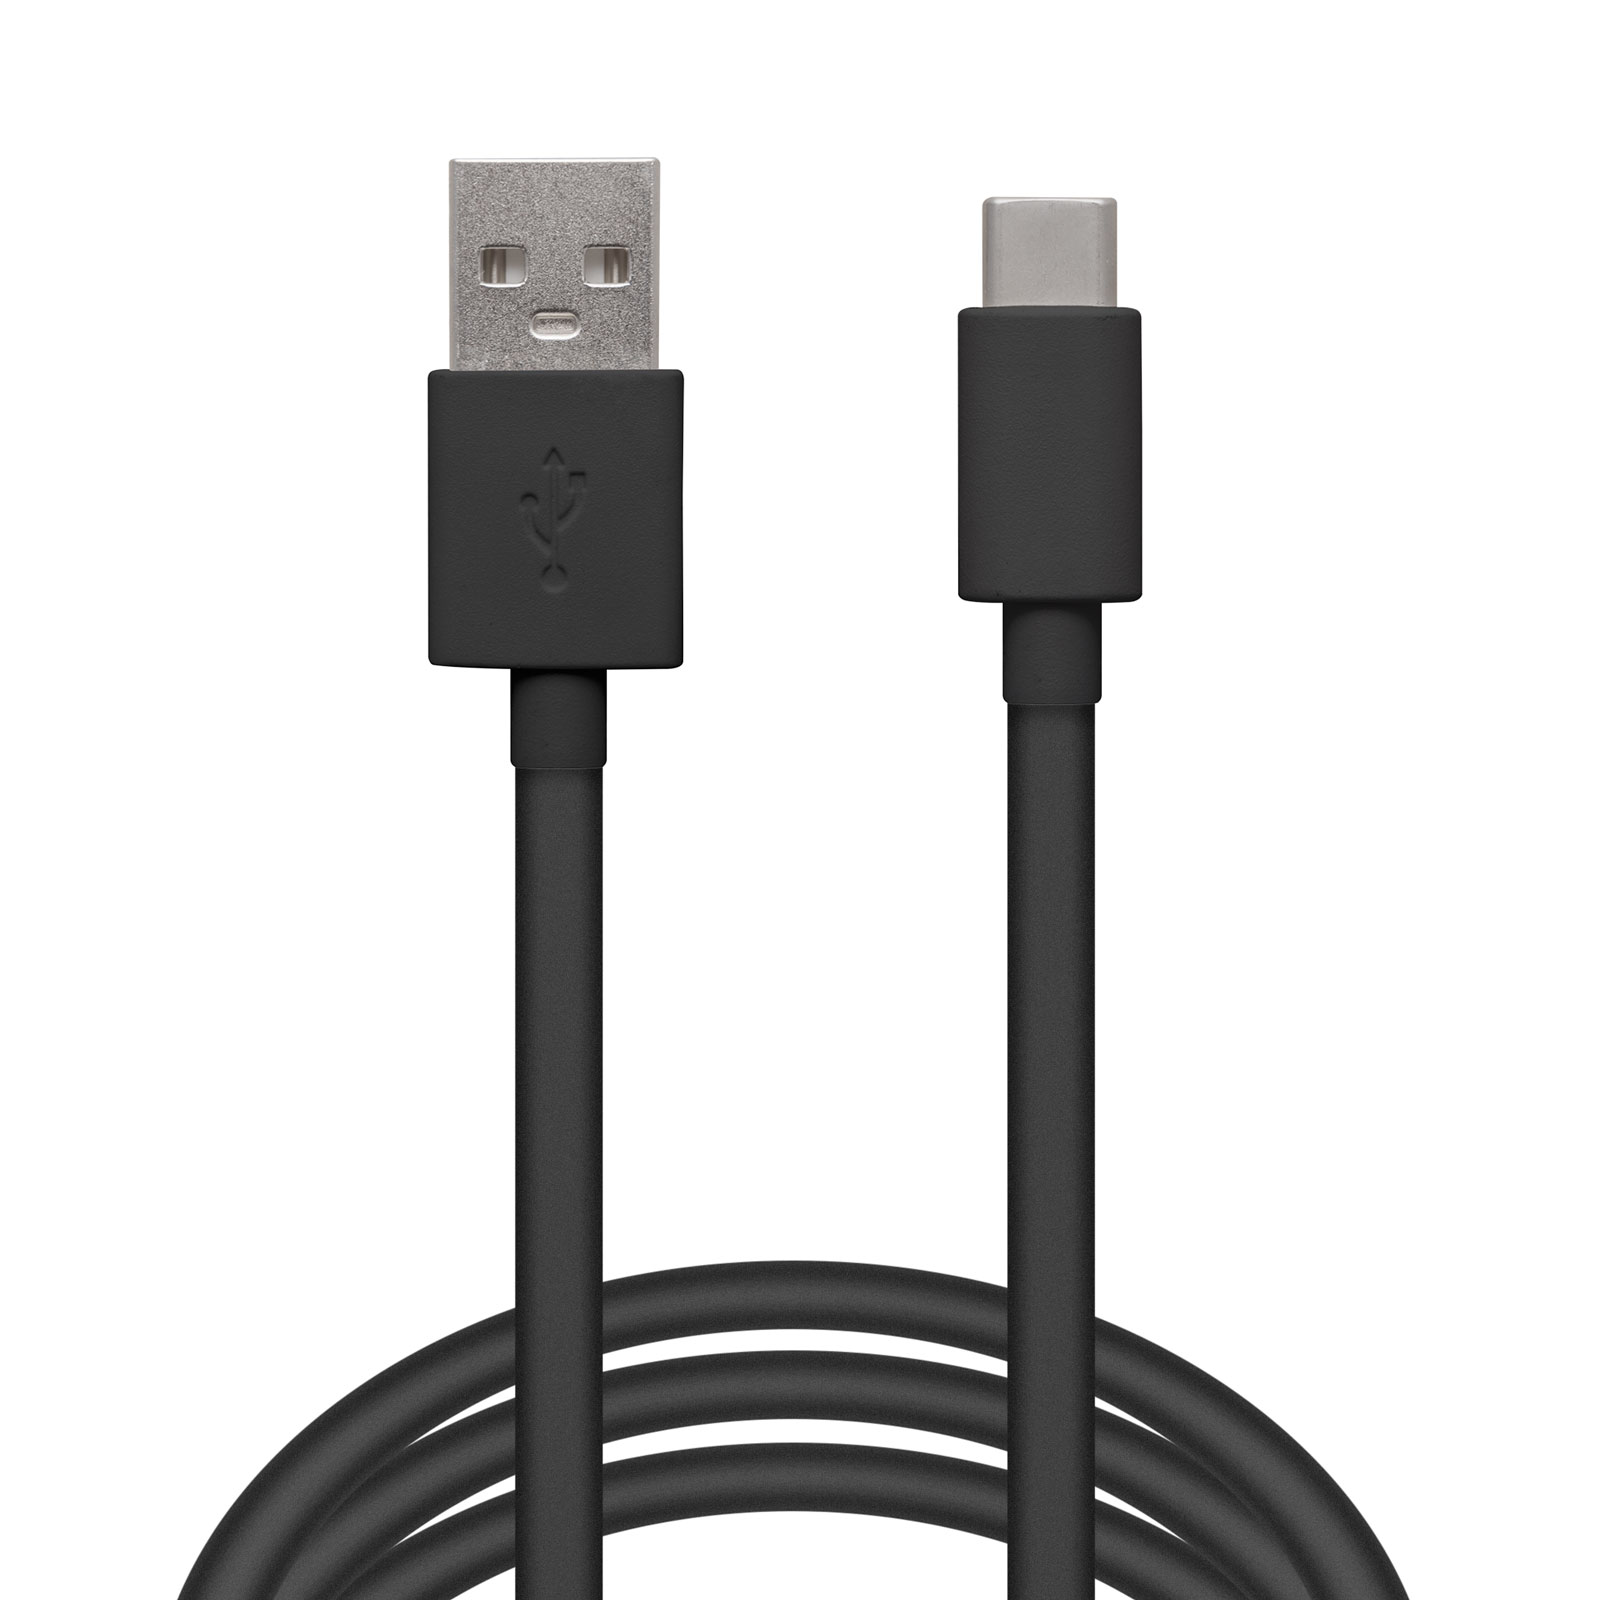 Adatkábel - USB Type-C - fekete - 2 m - 55550BK-2